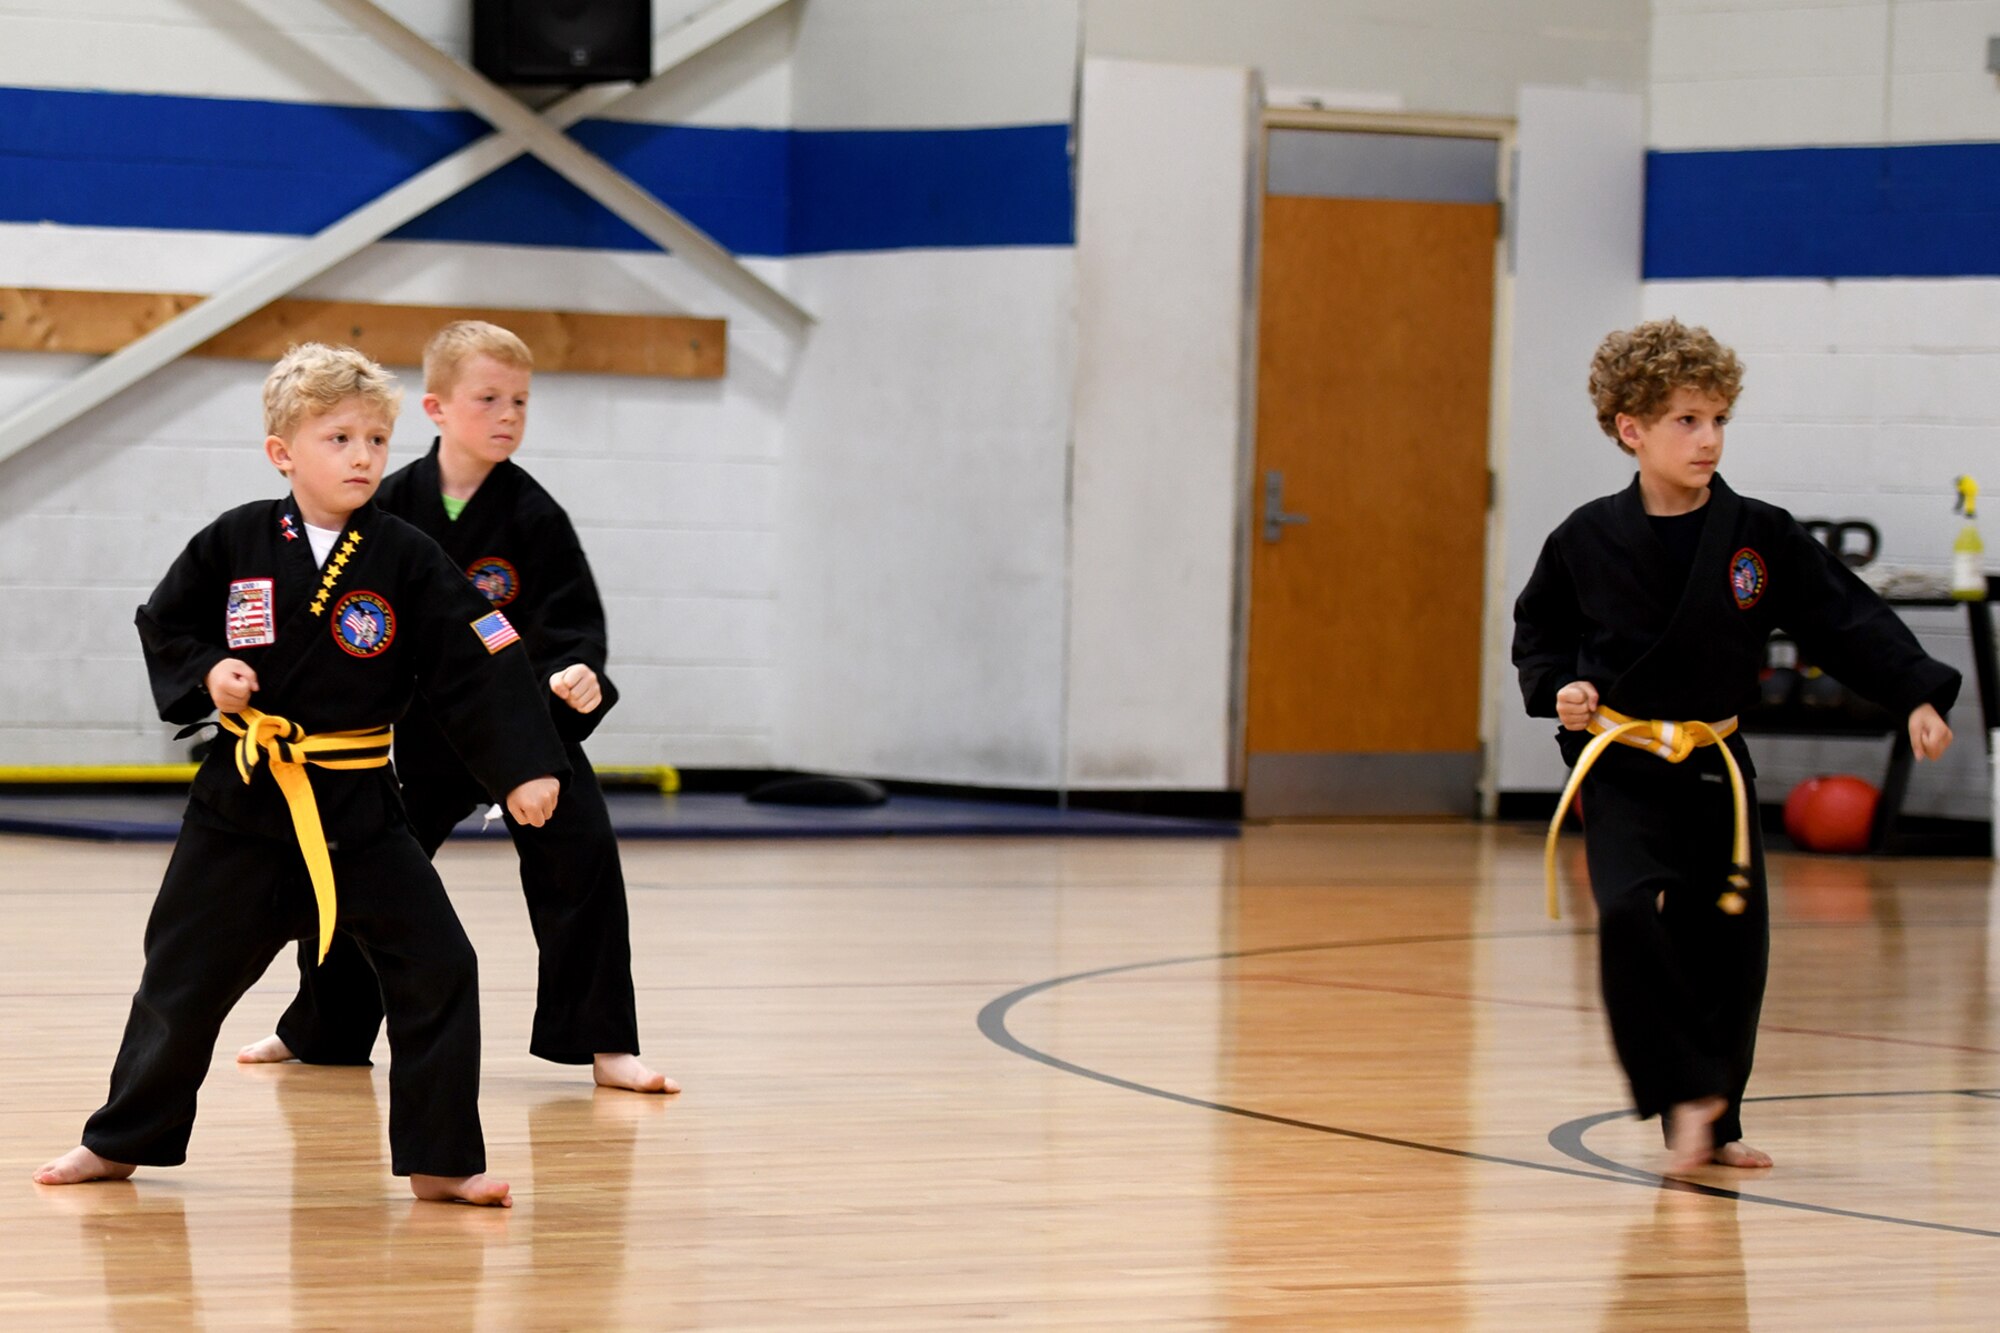 Students practice karate.